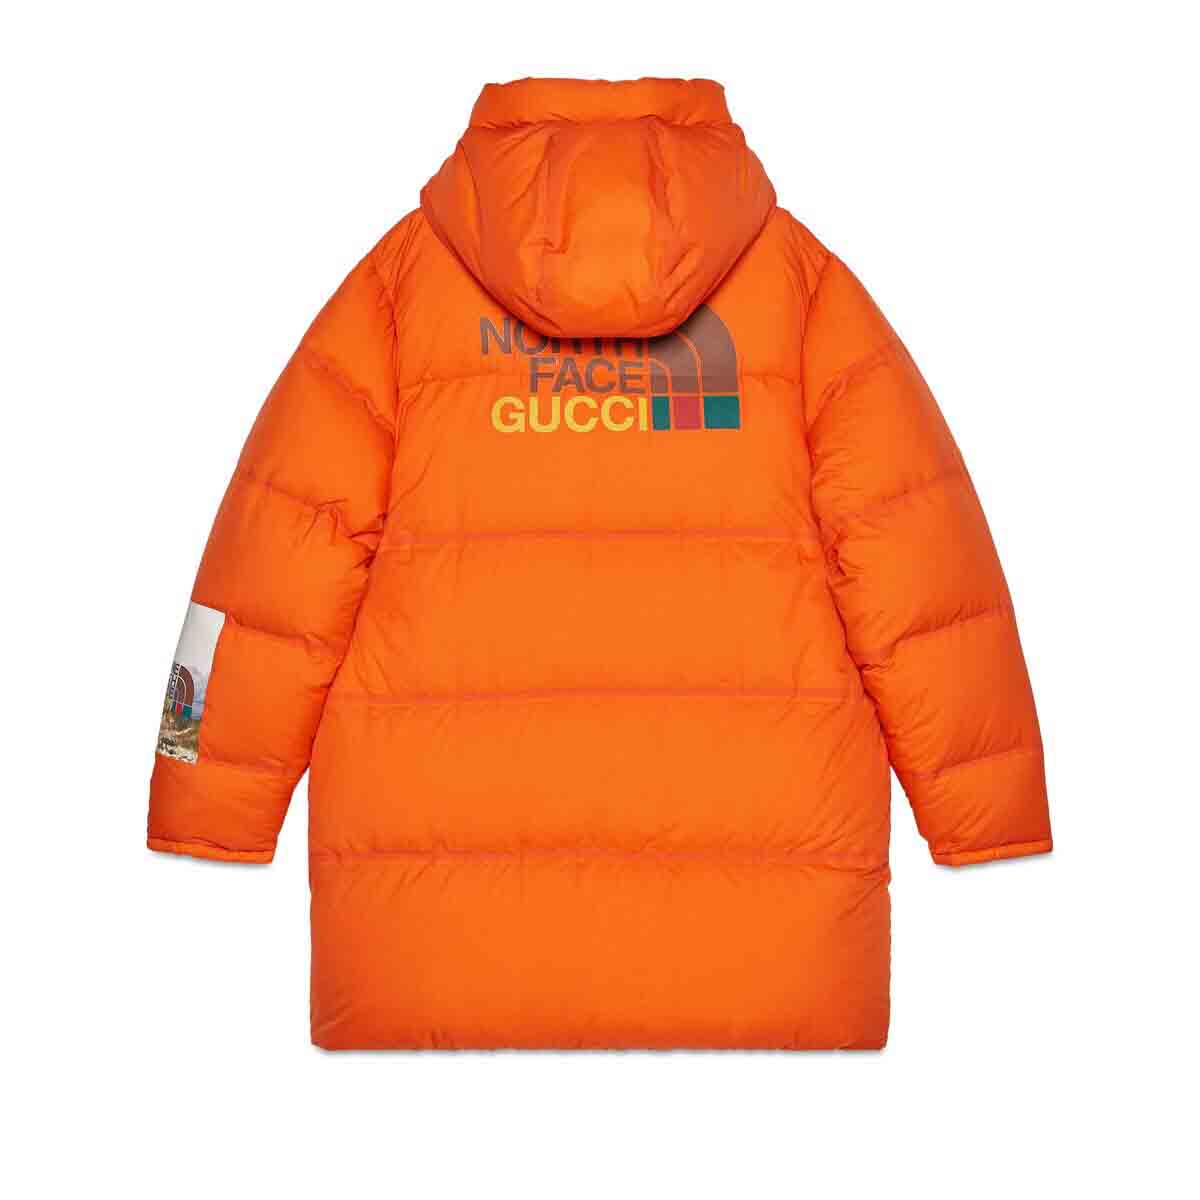 Gucci x The North Face Nylon Jacket Orange